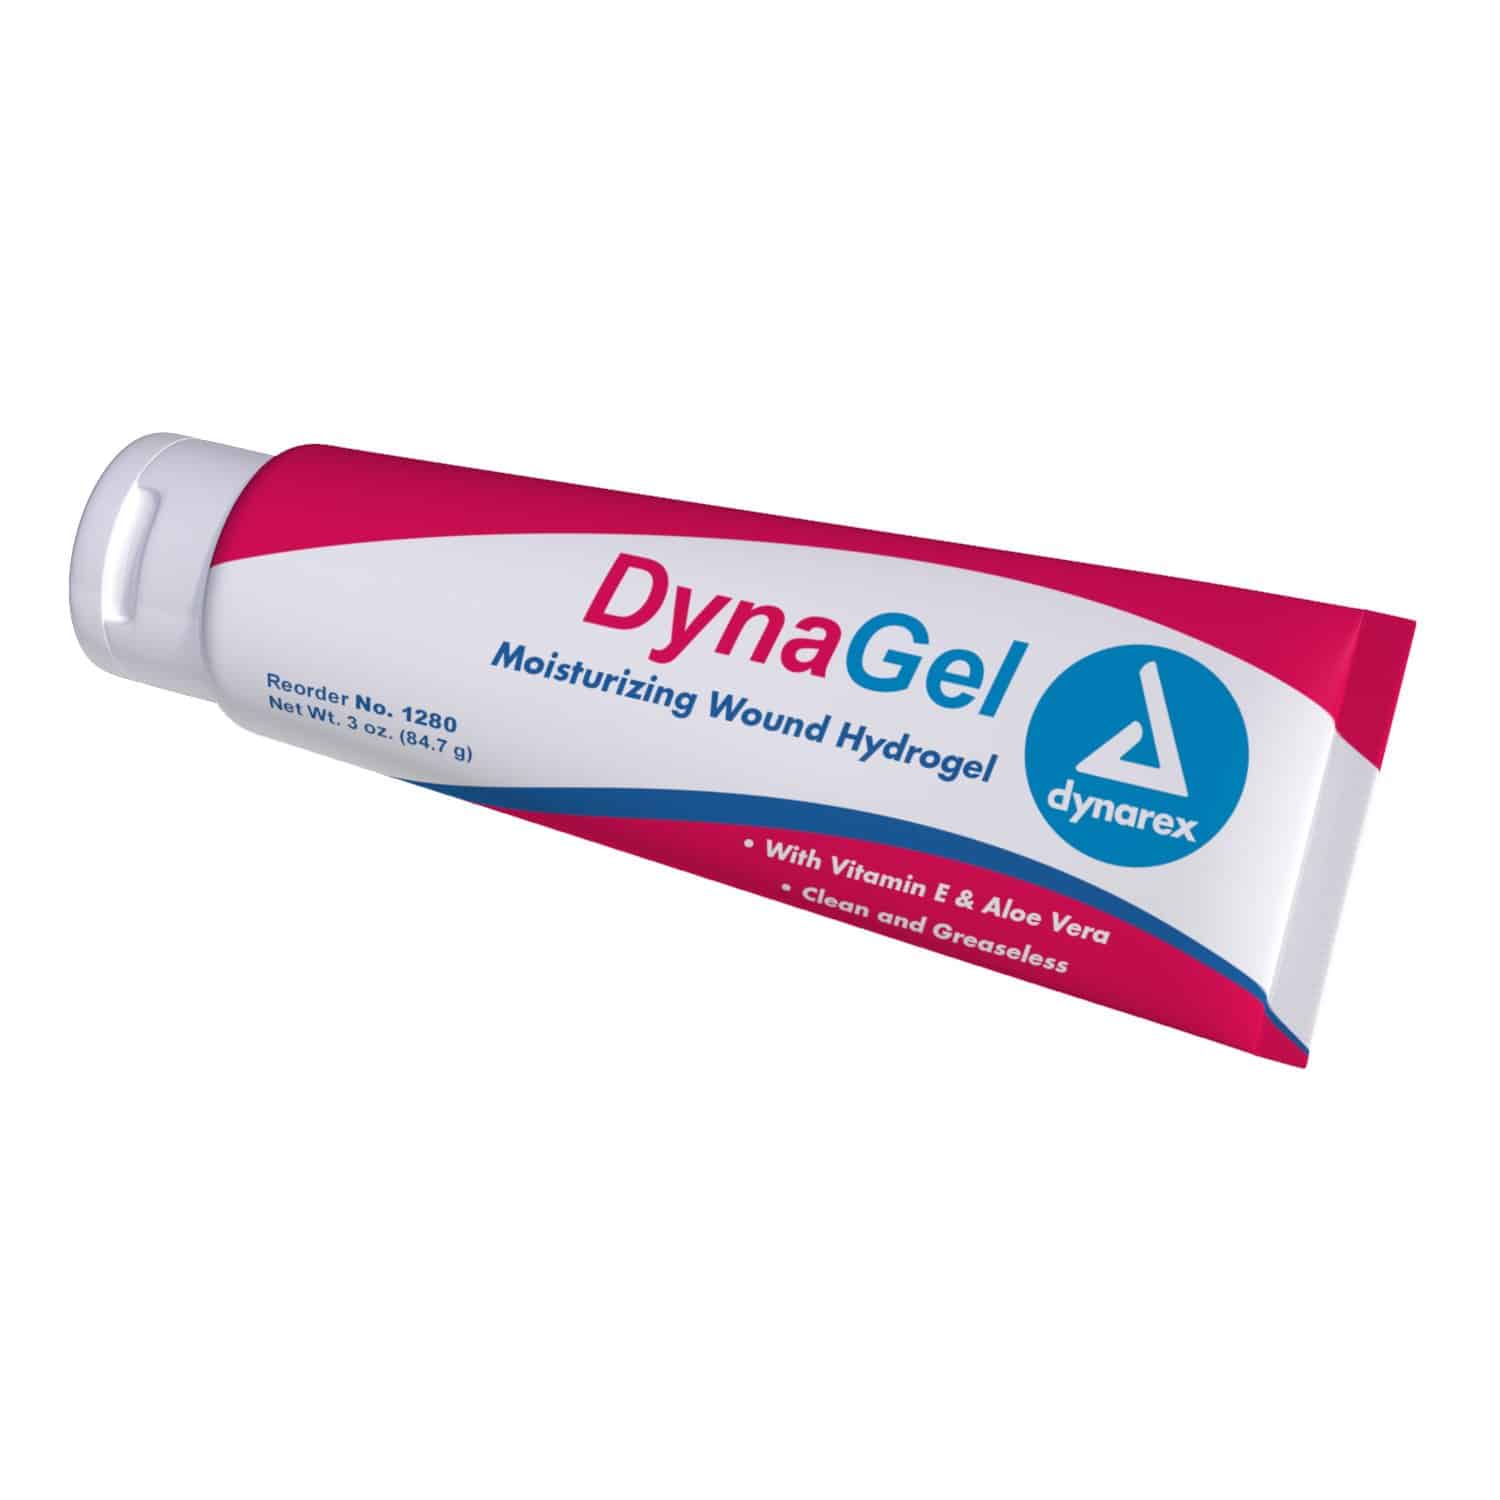 Dynarex Hydrogel Wound Dressing Gel, 3 Oz Online at Ritewaymed.com